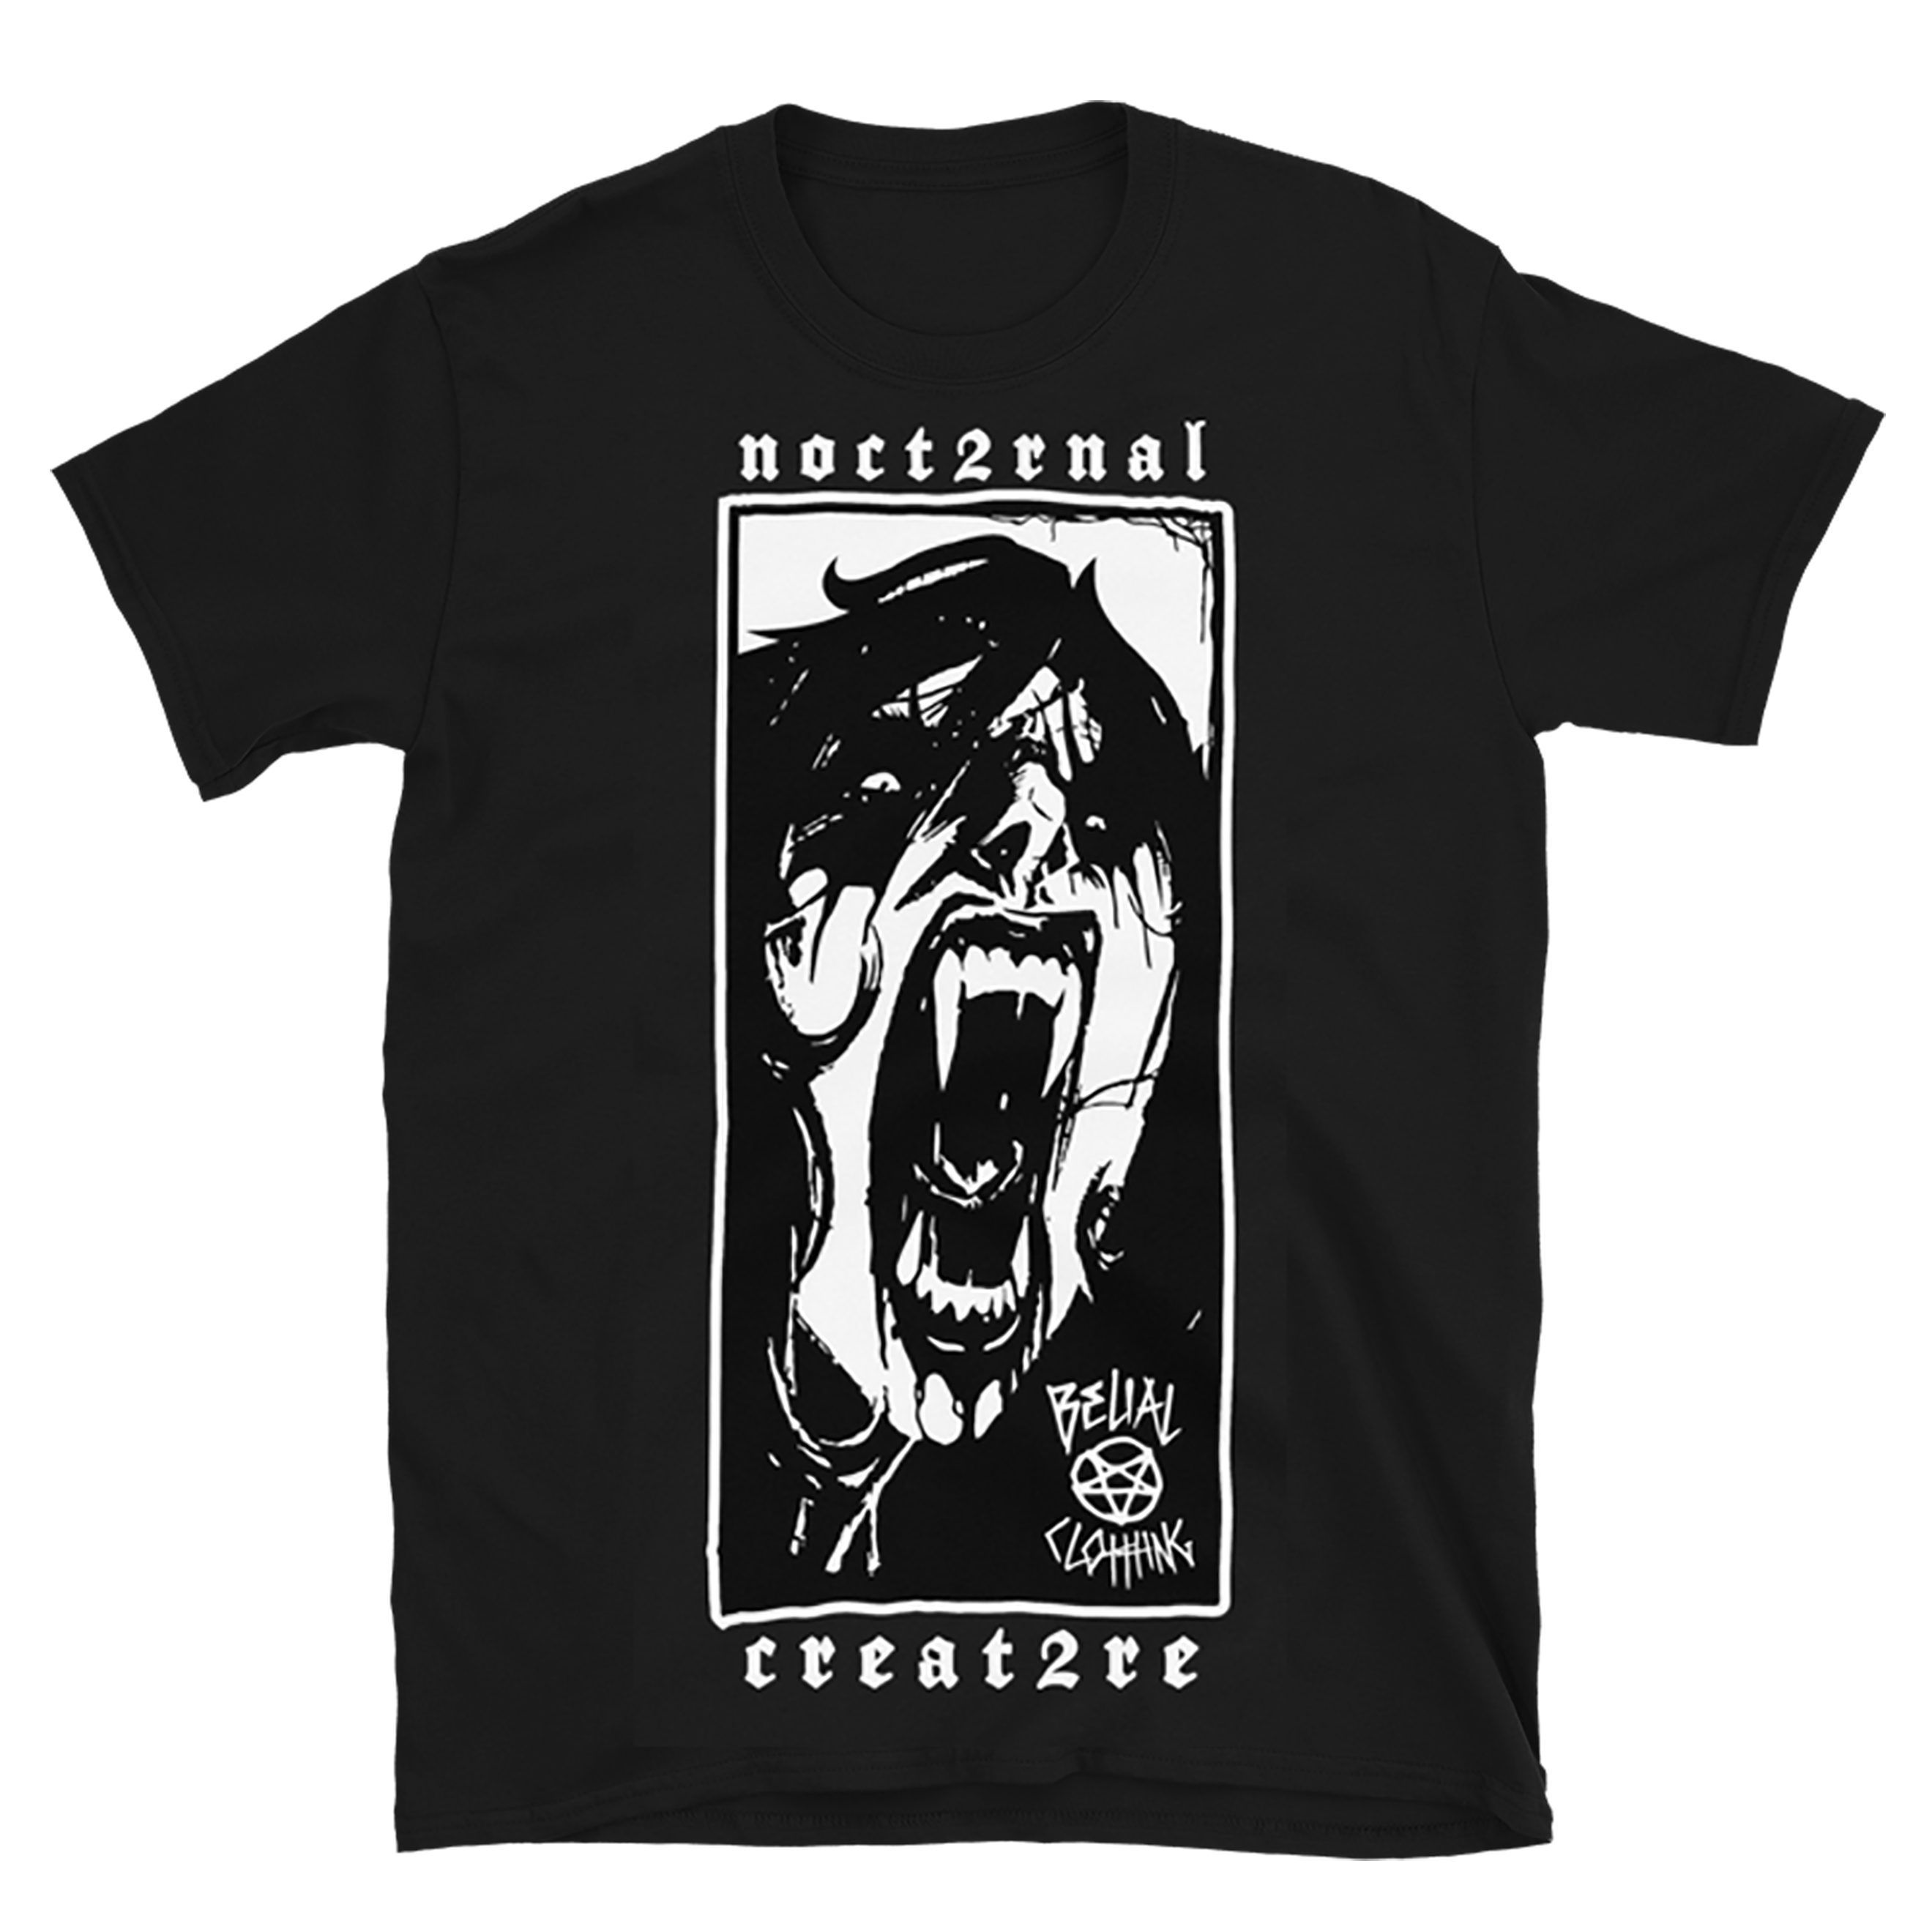 Nocturnal Creature Short-Sleeve Unisex T-Shirt